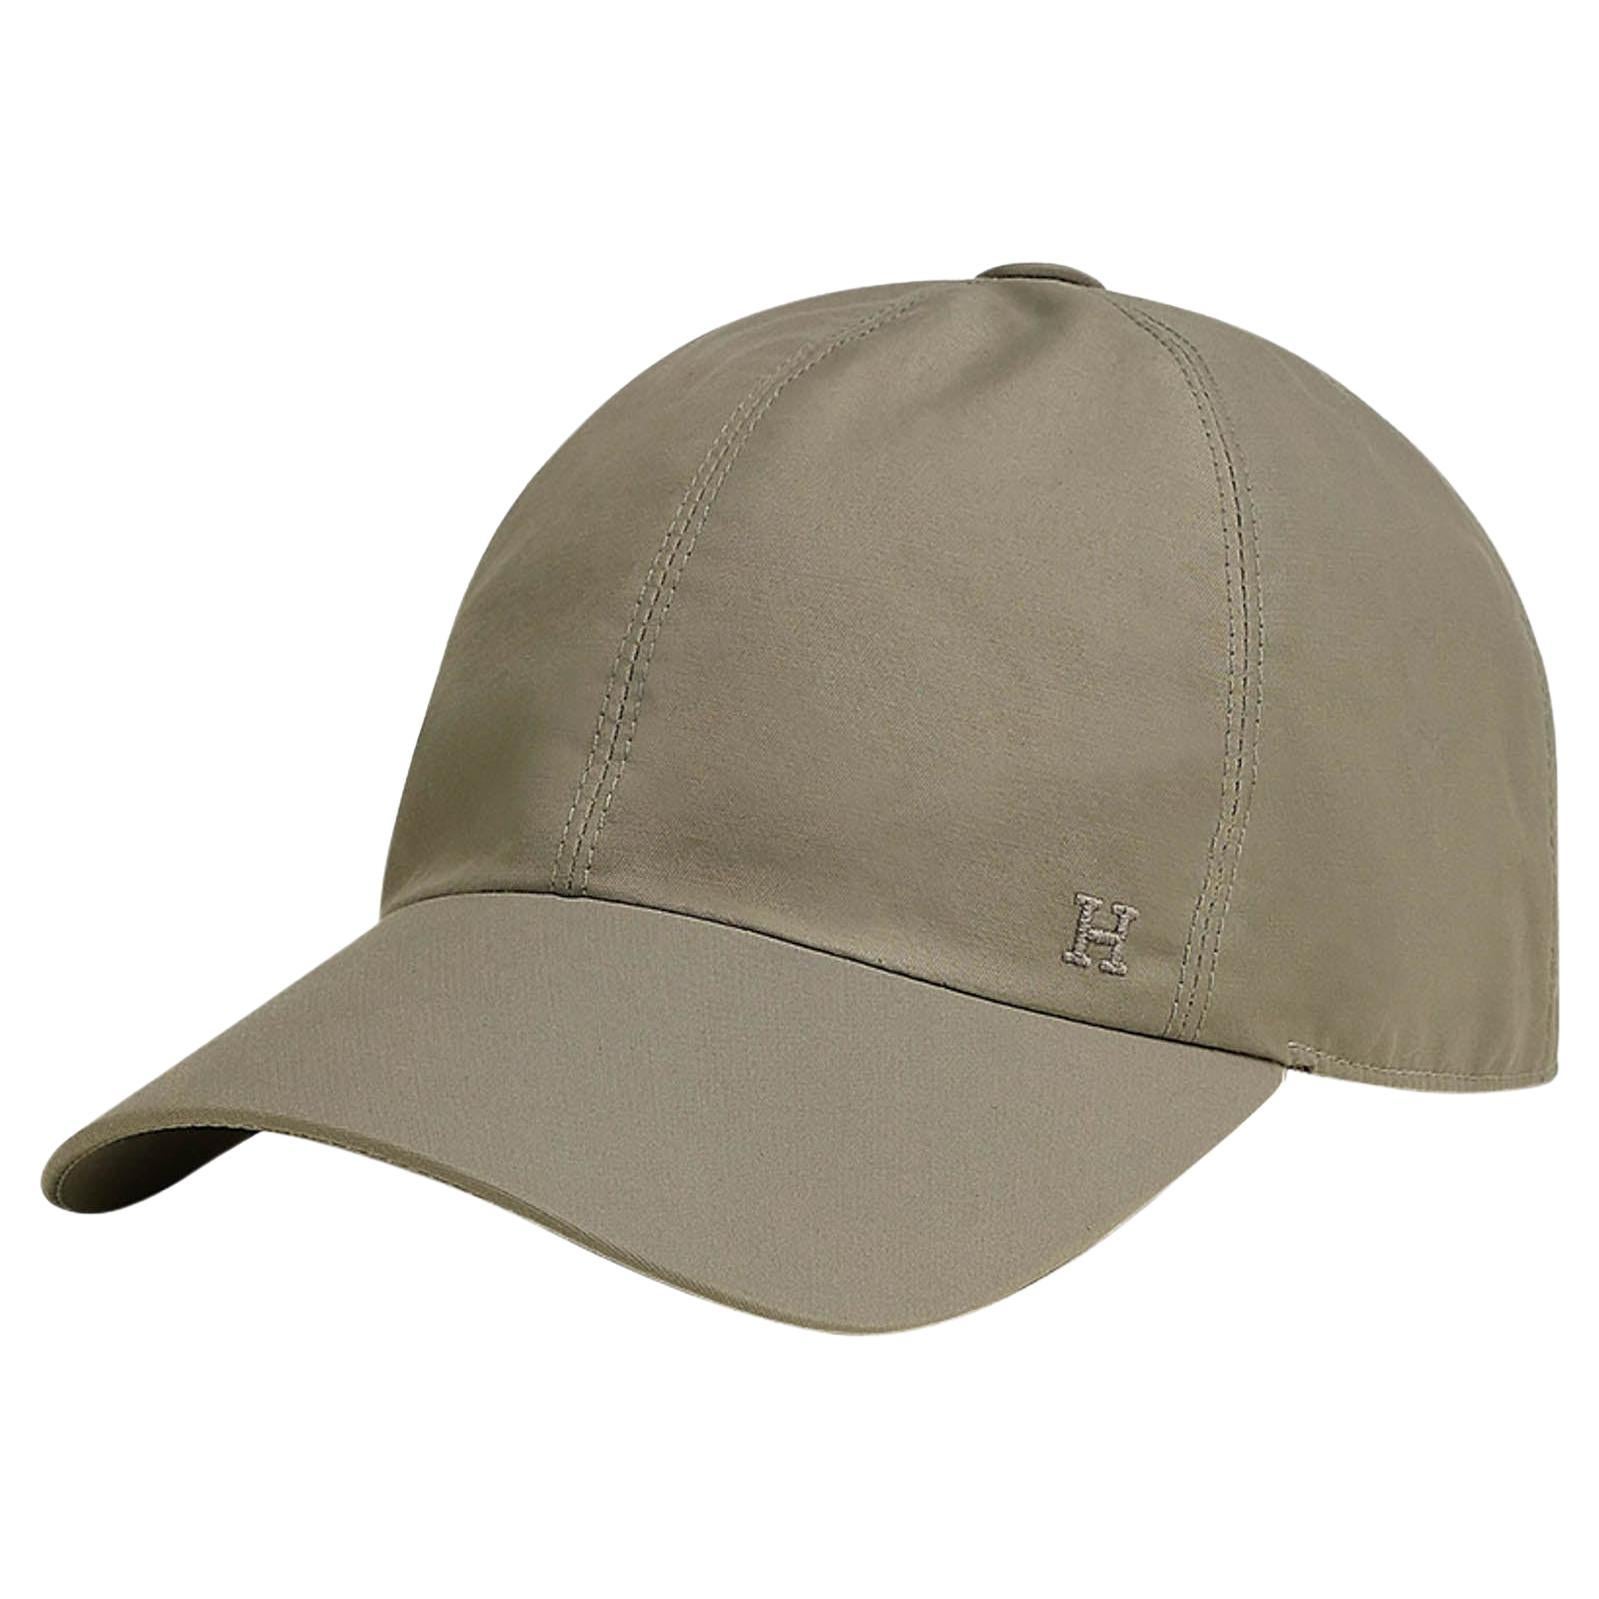 UA Supreme New Era Bandana Box Logo Beanie Brown Hat